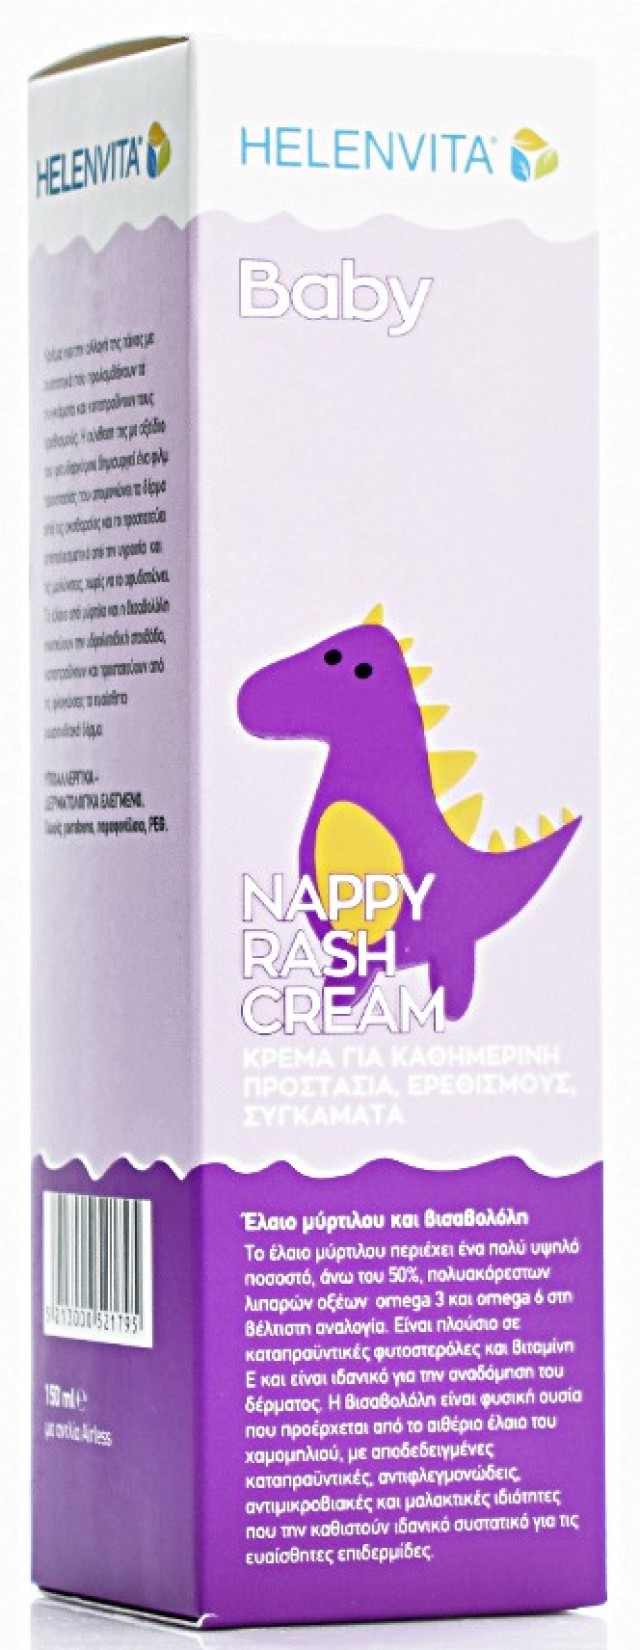 Helenvita Baby Nappy Rash Cream Κρέμα για την Καθημερινή Προστασία από Ερεθισμούς & Συγκάματα 150ml